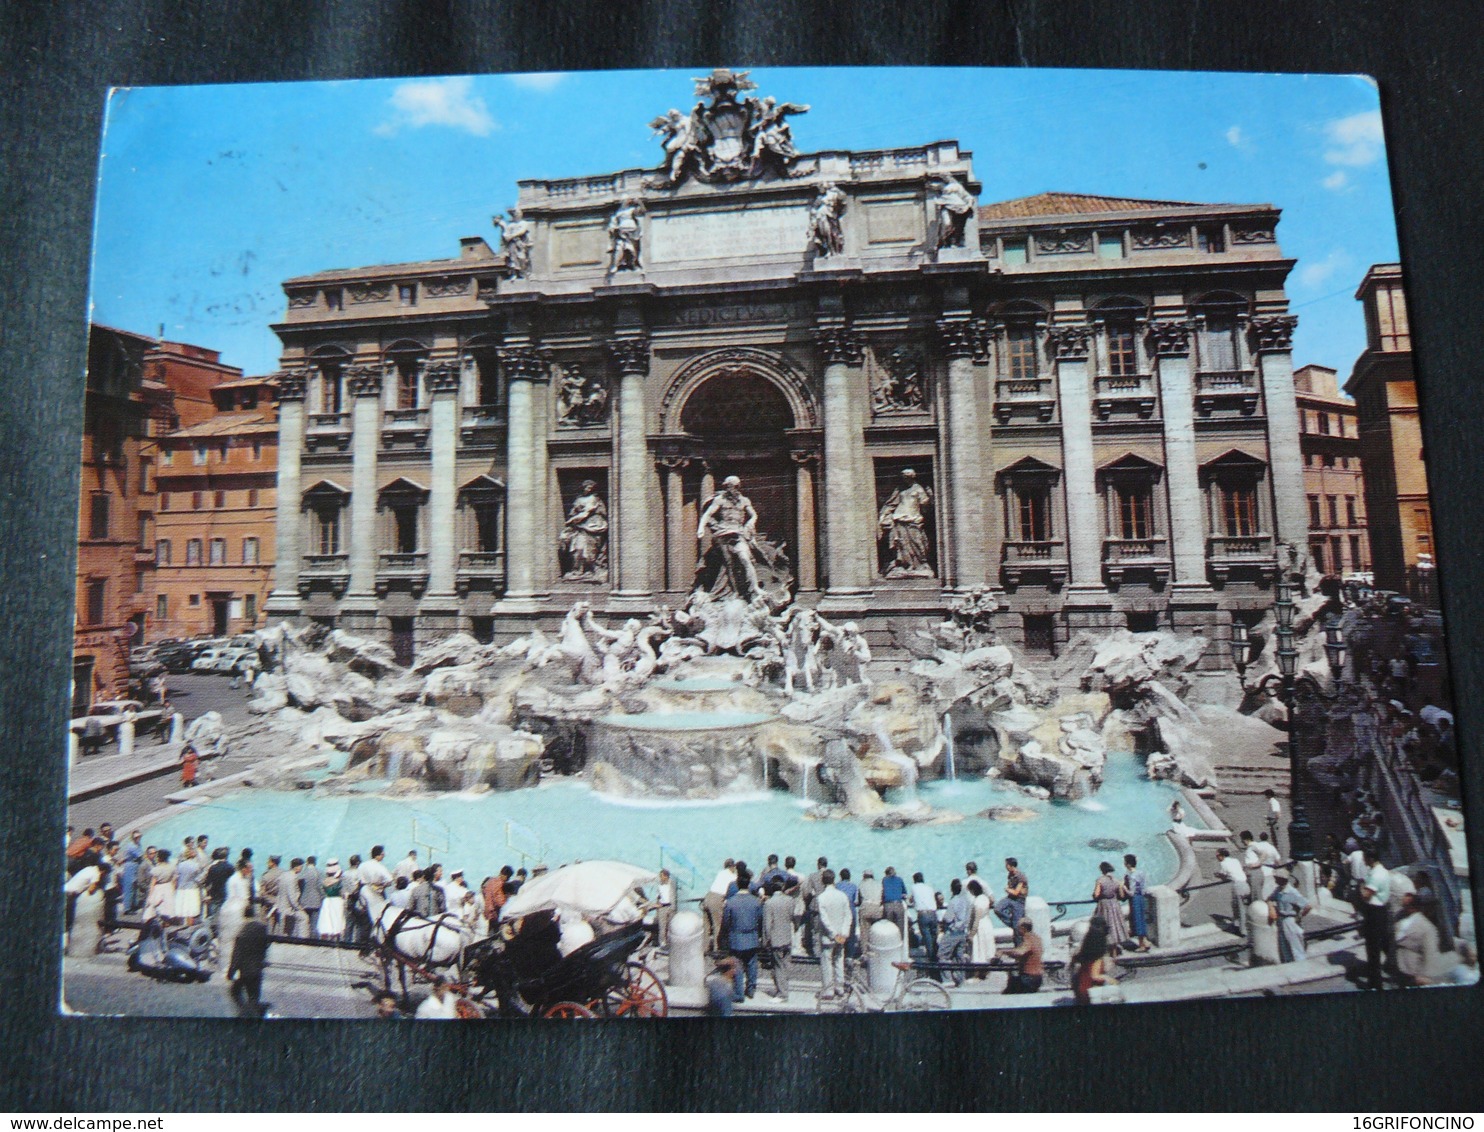 8 ANCIENT BEAUTIFULS POSTCARDS OF ROME..1959-61-63-63-63-64-64-69 ..//..8 BELLE CARTOLINE VIAGGIATE DI ROMA - Verzamelingen